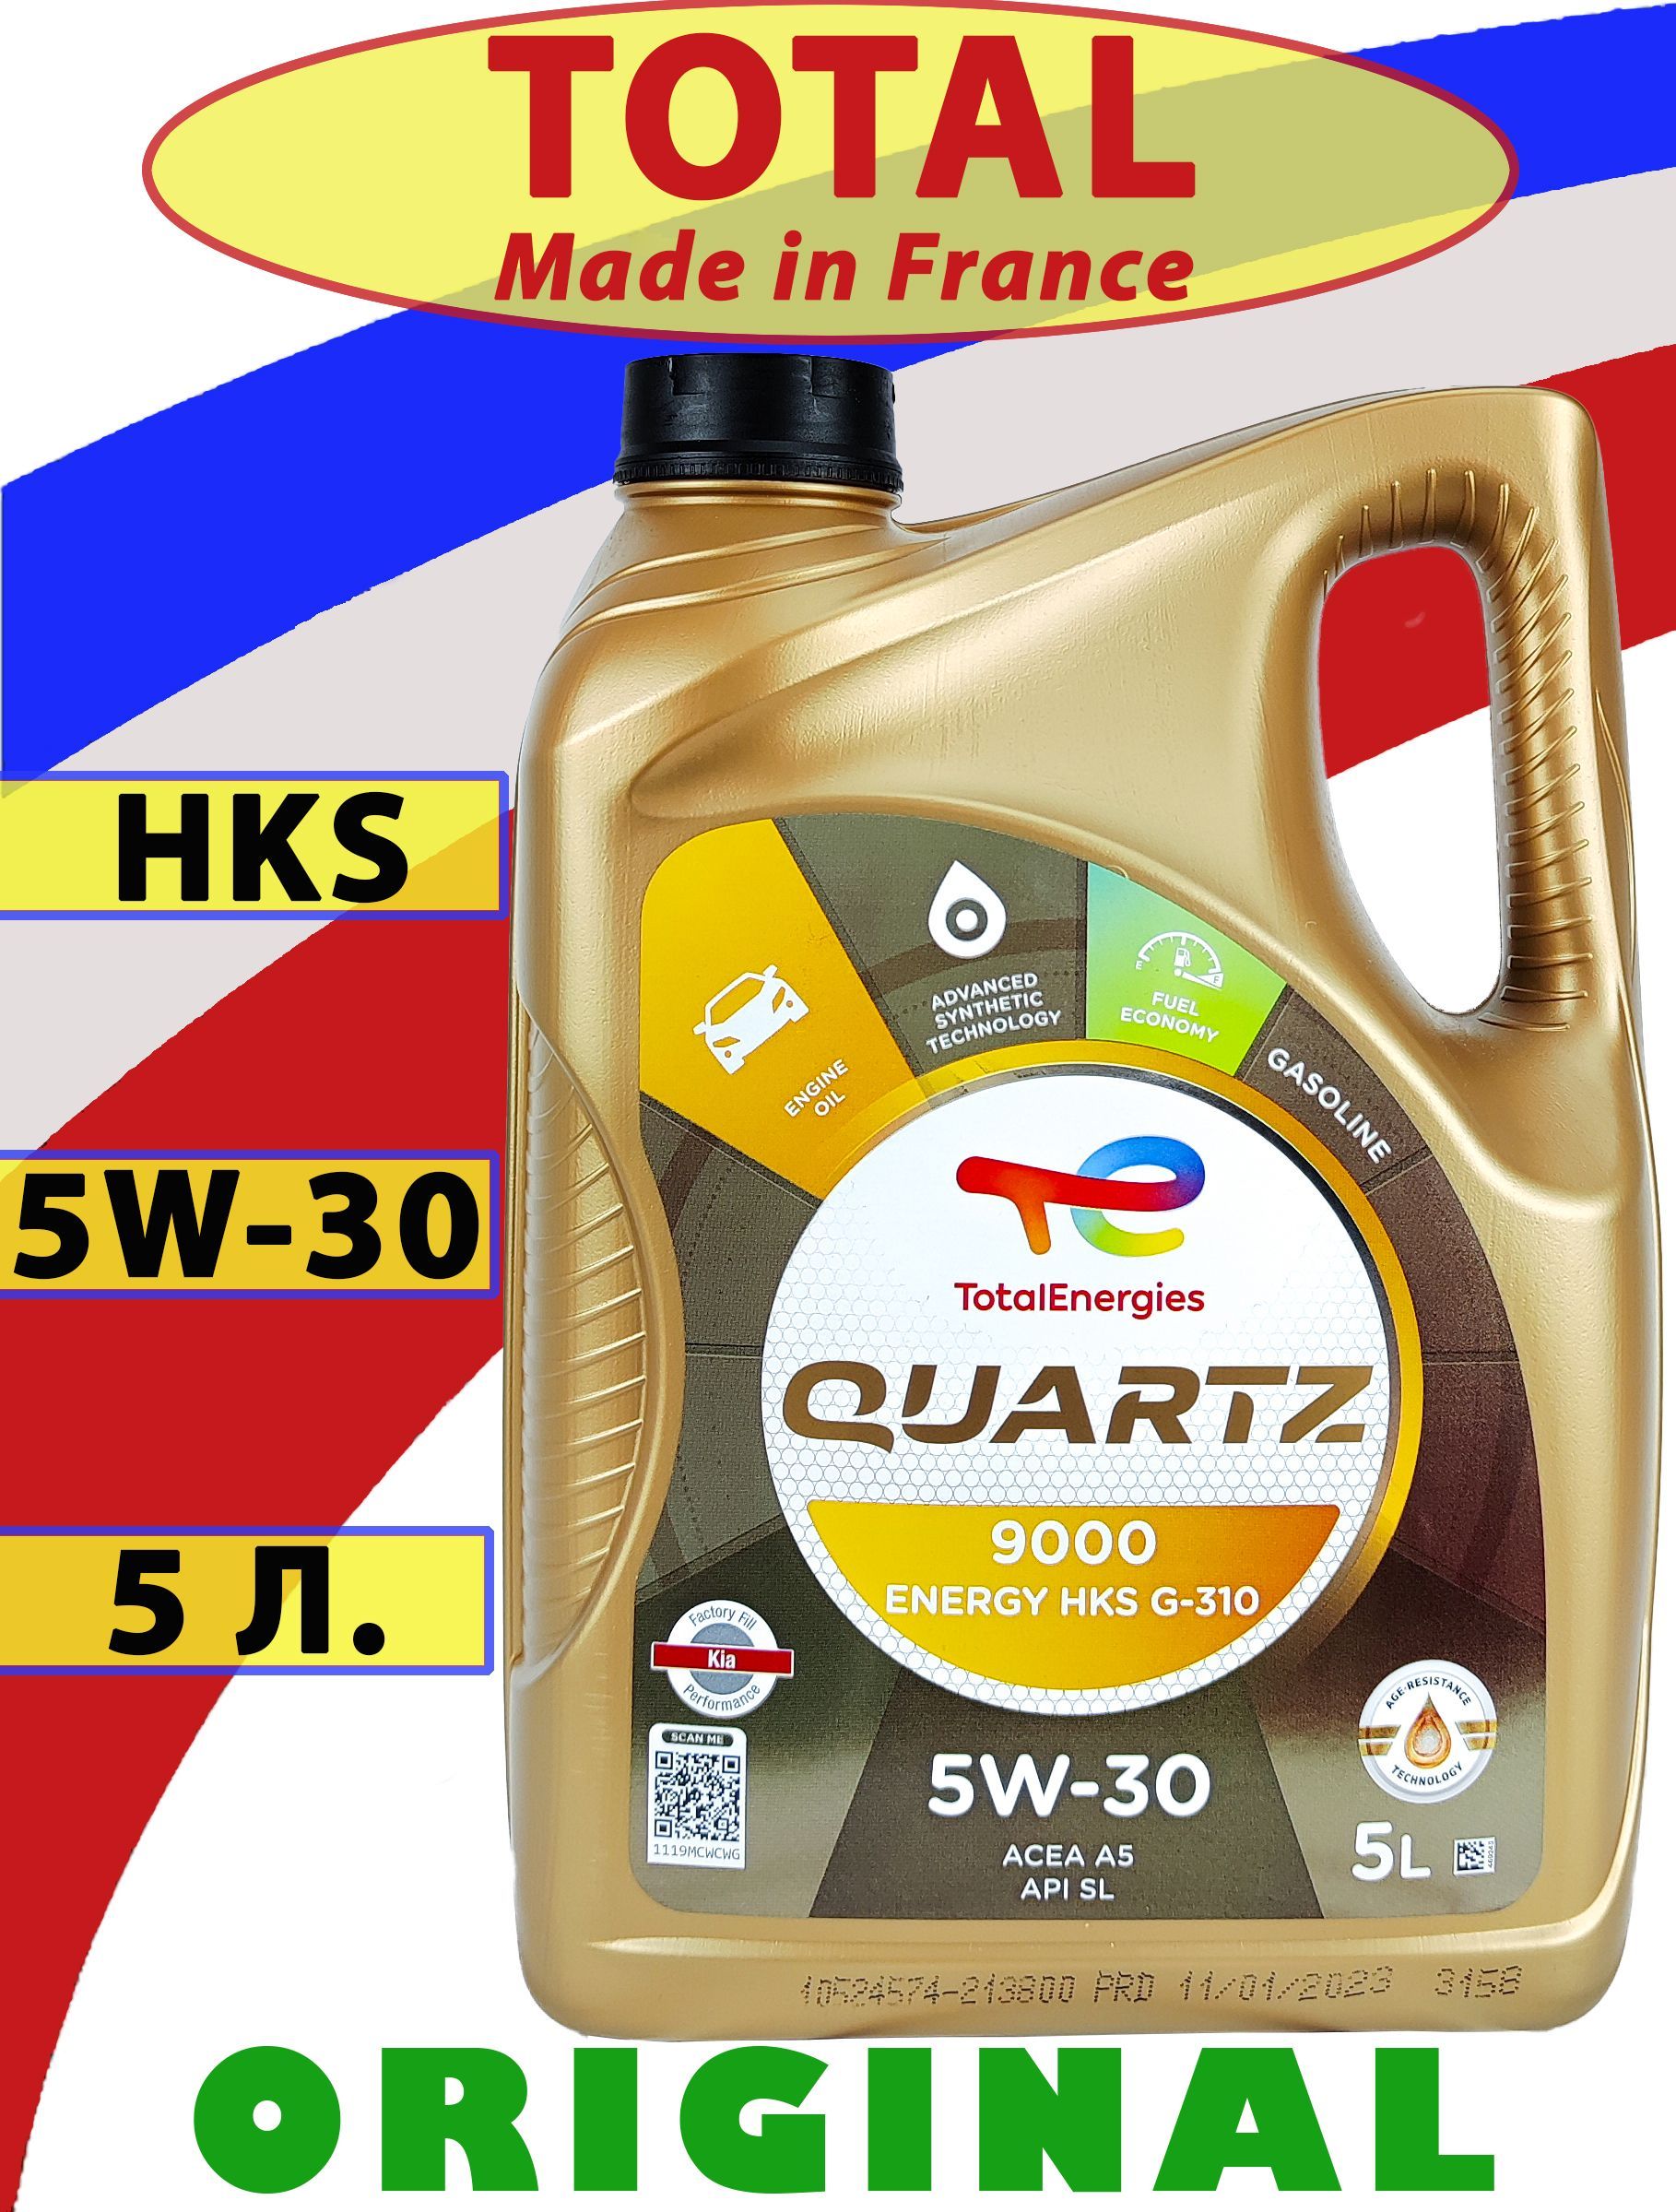 Total quartz hks 5w 30 купить. Масло 5w30 HKS 310. Масло тотал кварц Энерджи HKS 9000 5w30 на розлив цвет. Купить моторное масло тотал кварц 9000 5w30 HKS g310.